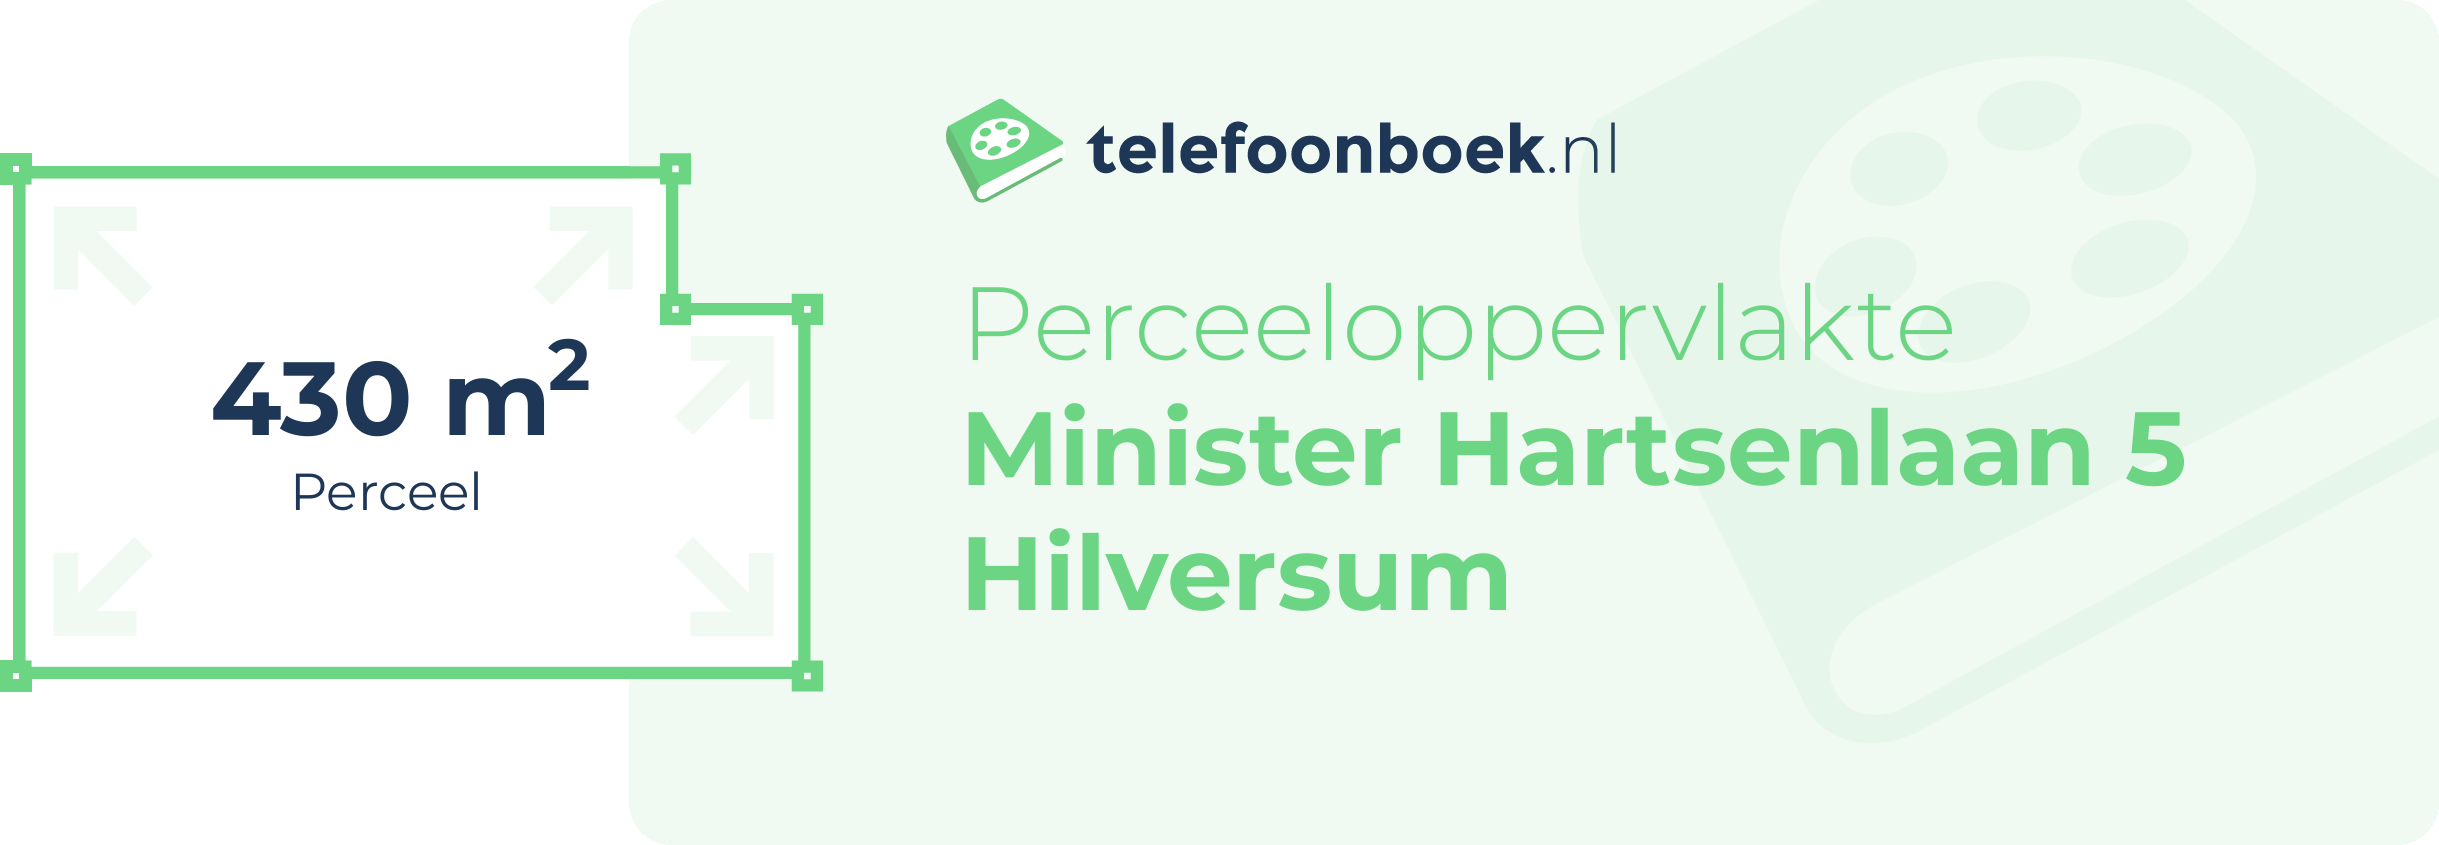 Perceeloppervlakte Minister Hartsenlaan 5 Hilversum